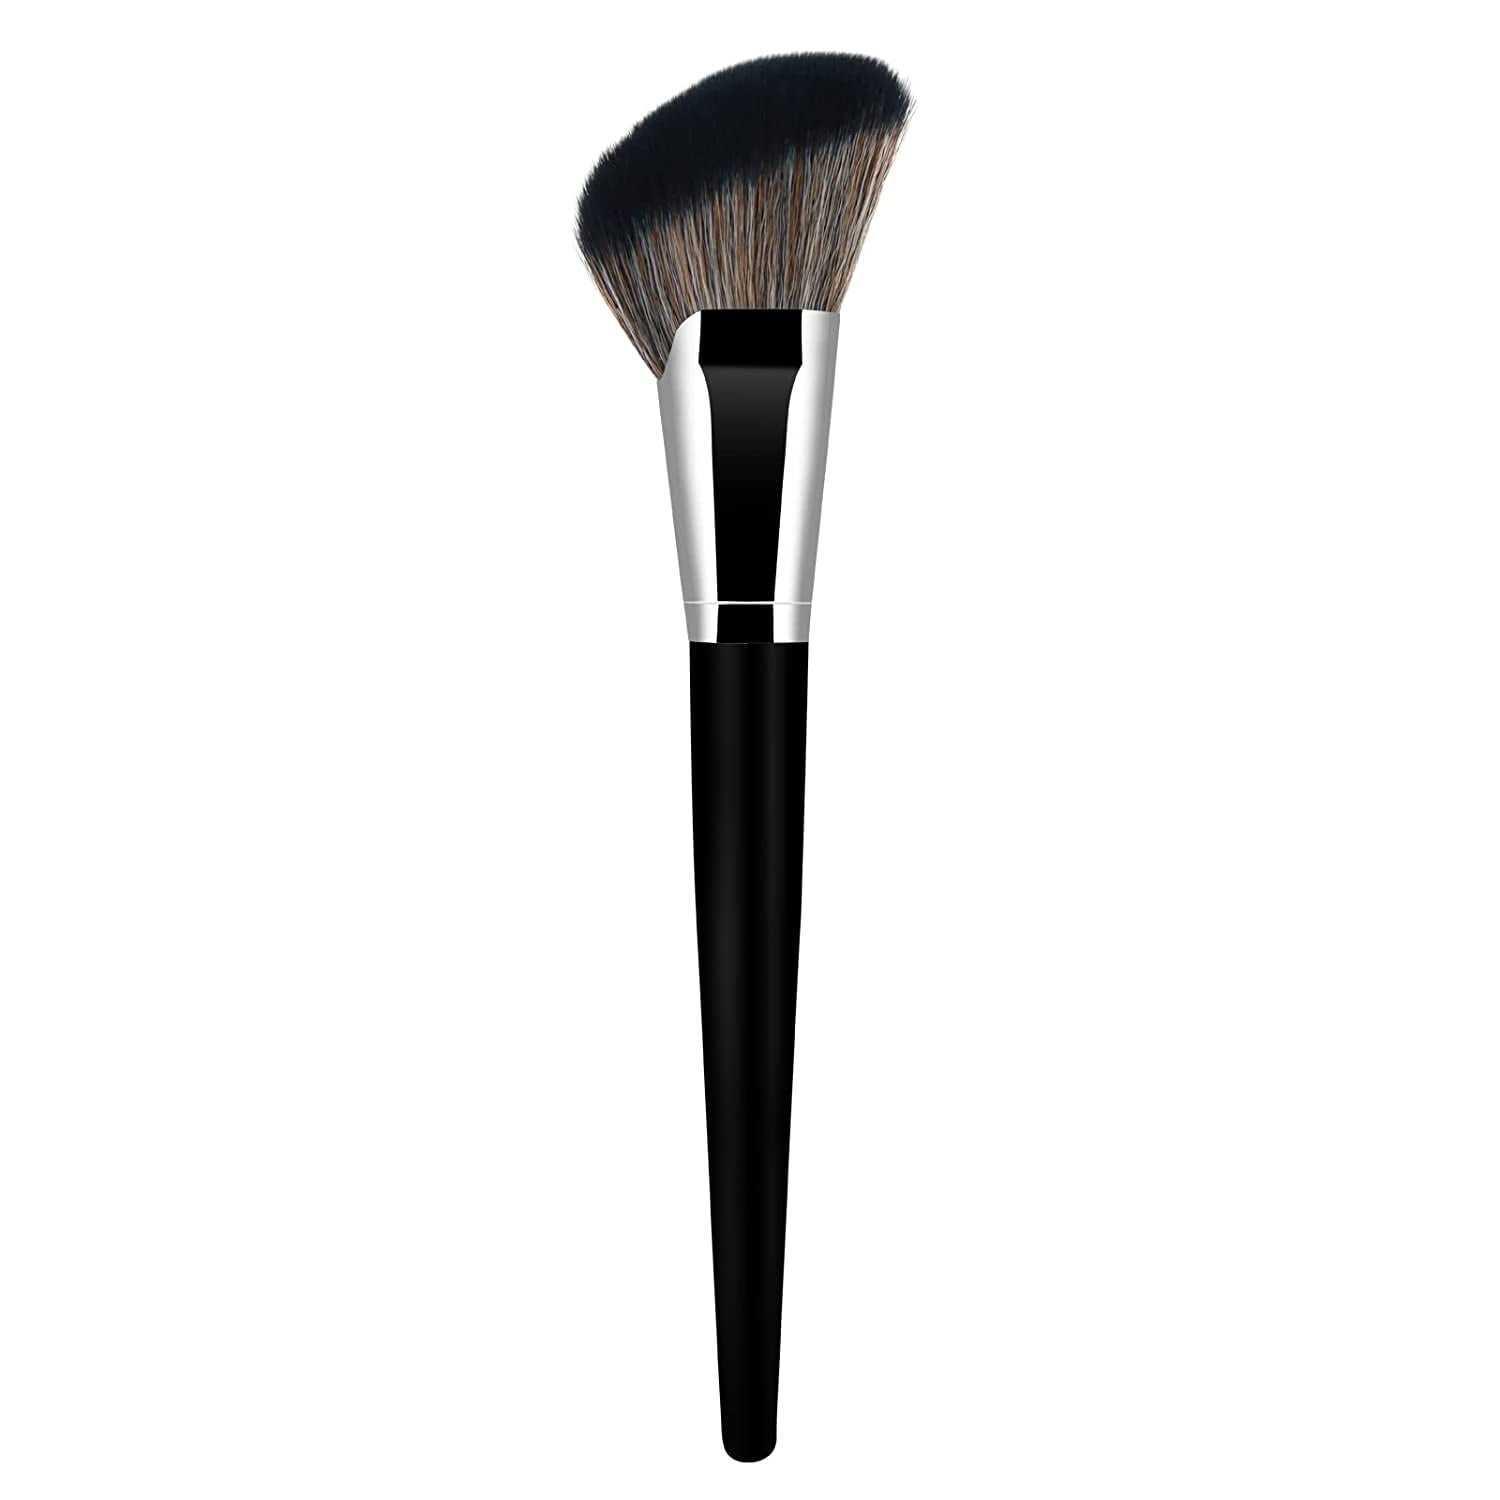 South Korea Lightweight and Thin Face Contour Brush Ultra Thin Foundation  Brush Flat Contour Brush Foundation Cream Makeup Brush - AliExpress